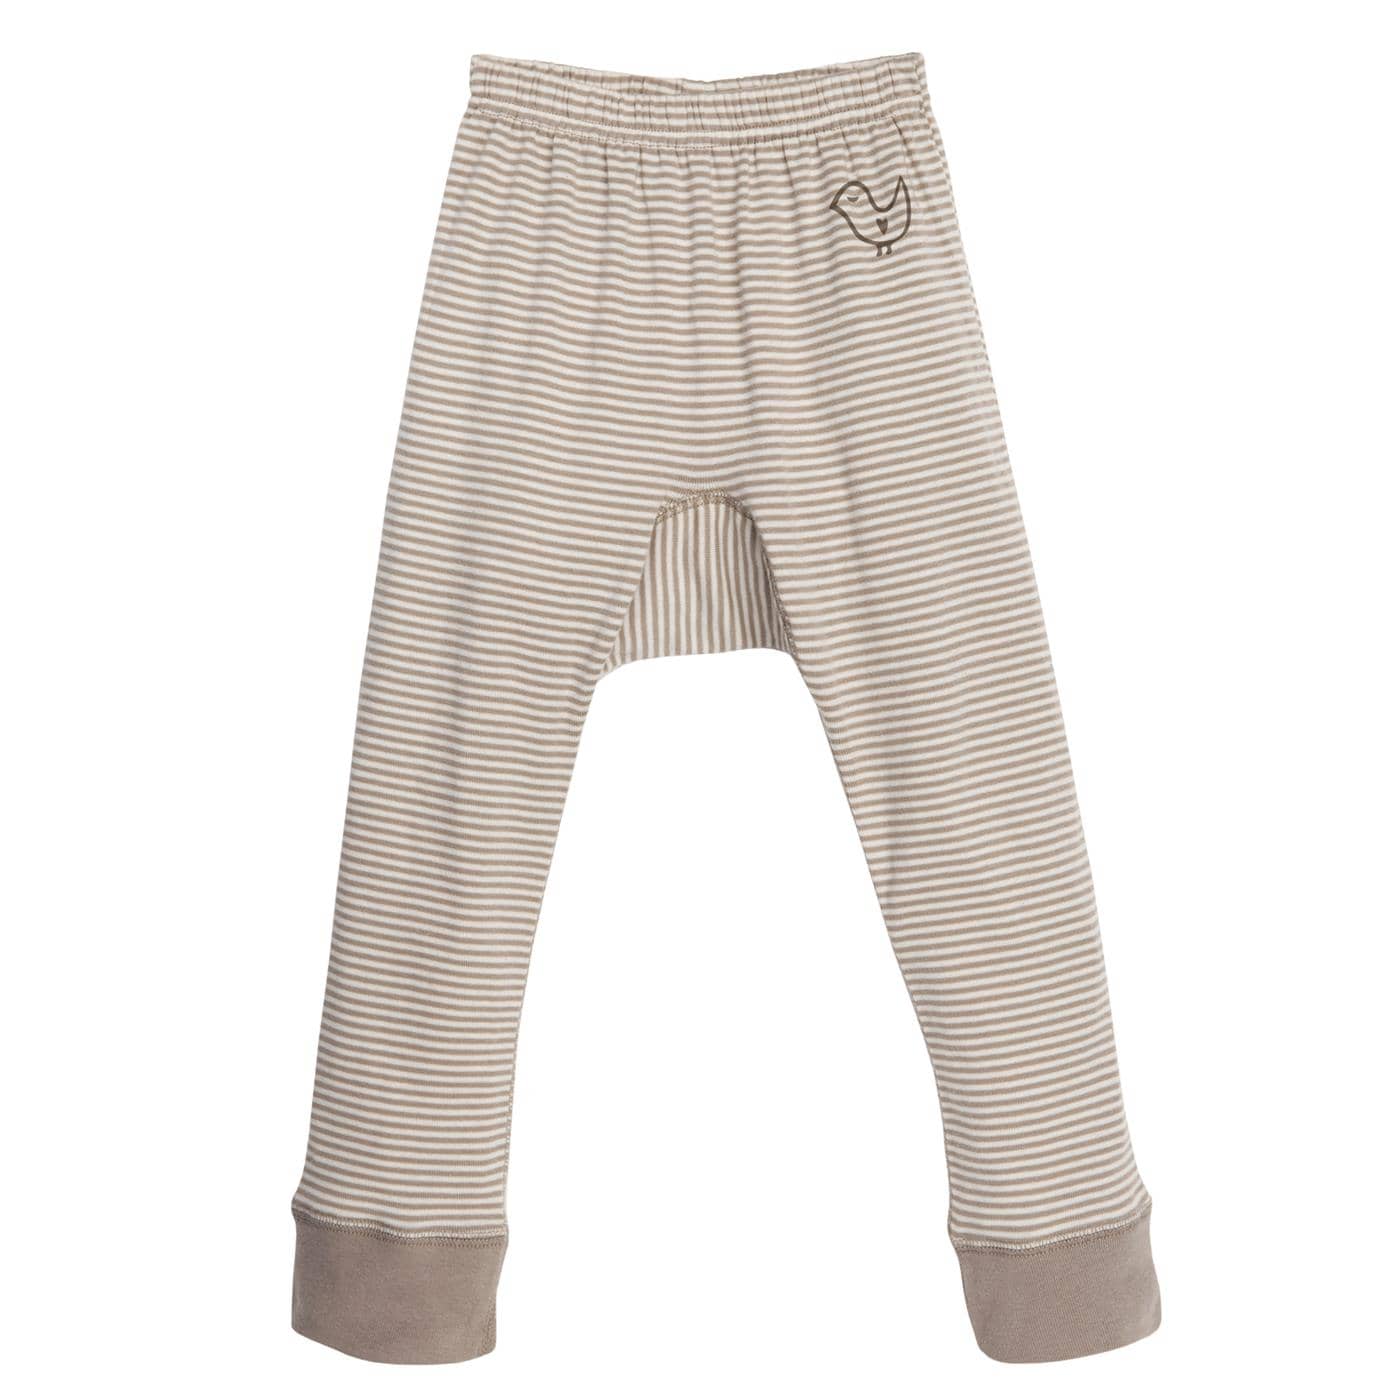 Engel Merino Wool/Silk Leggings for Women - Grey - Merino Wool